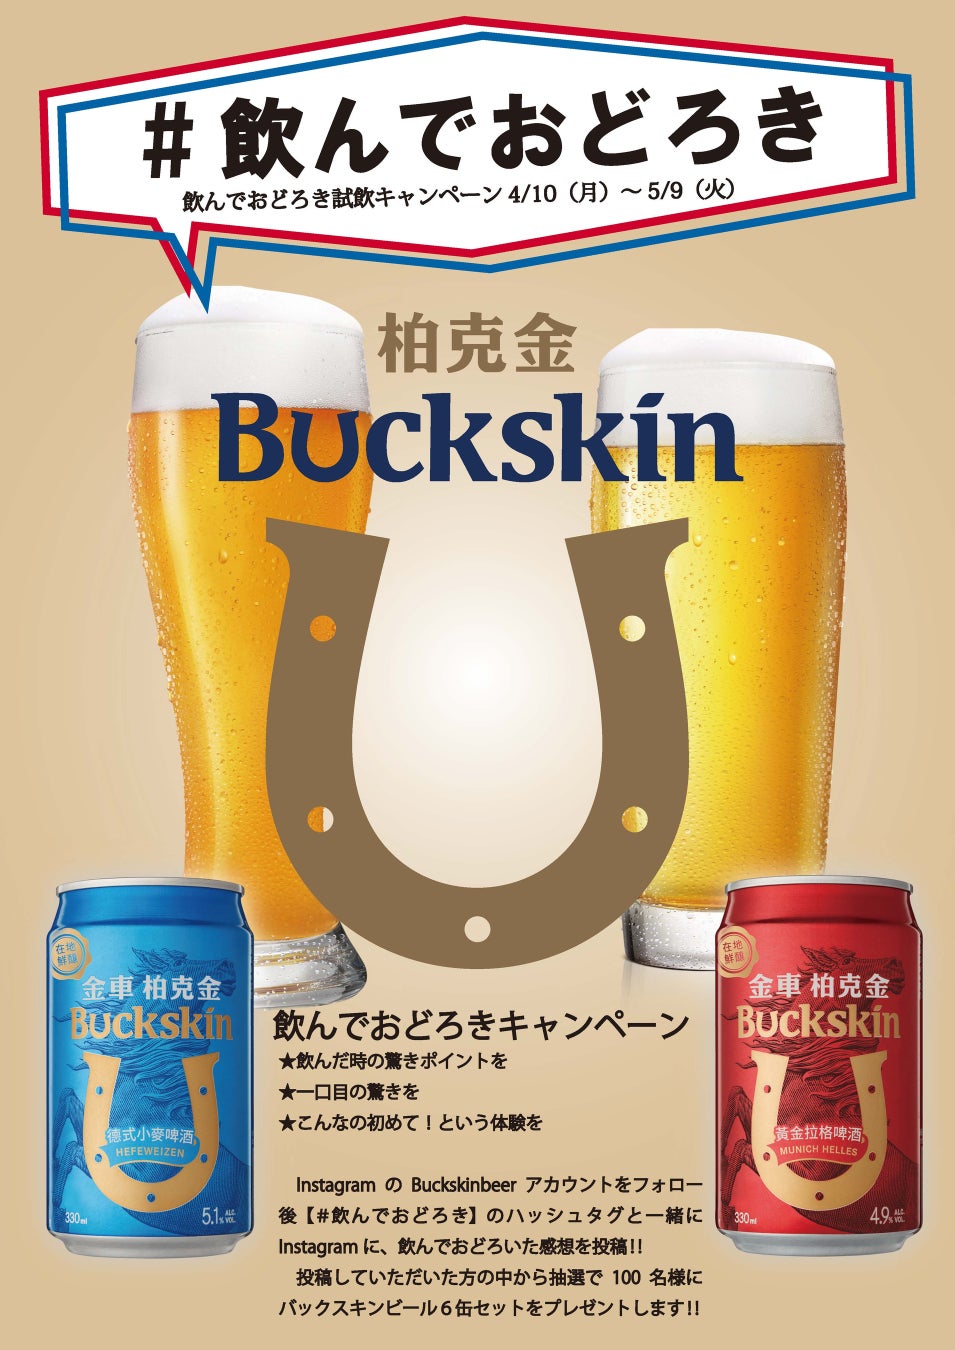 Buckskinビール【＃飲んでおどろき】キャンペーンを開催のサブ画像1